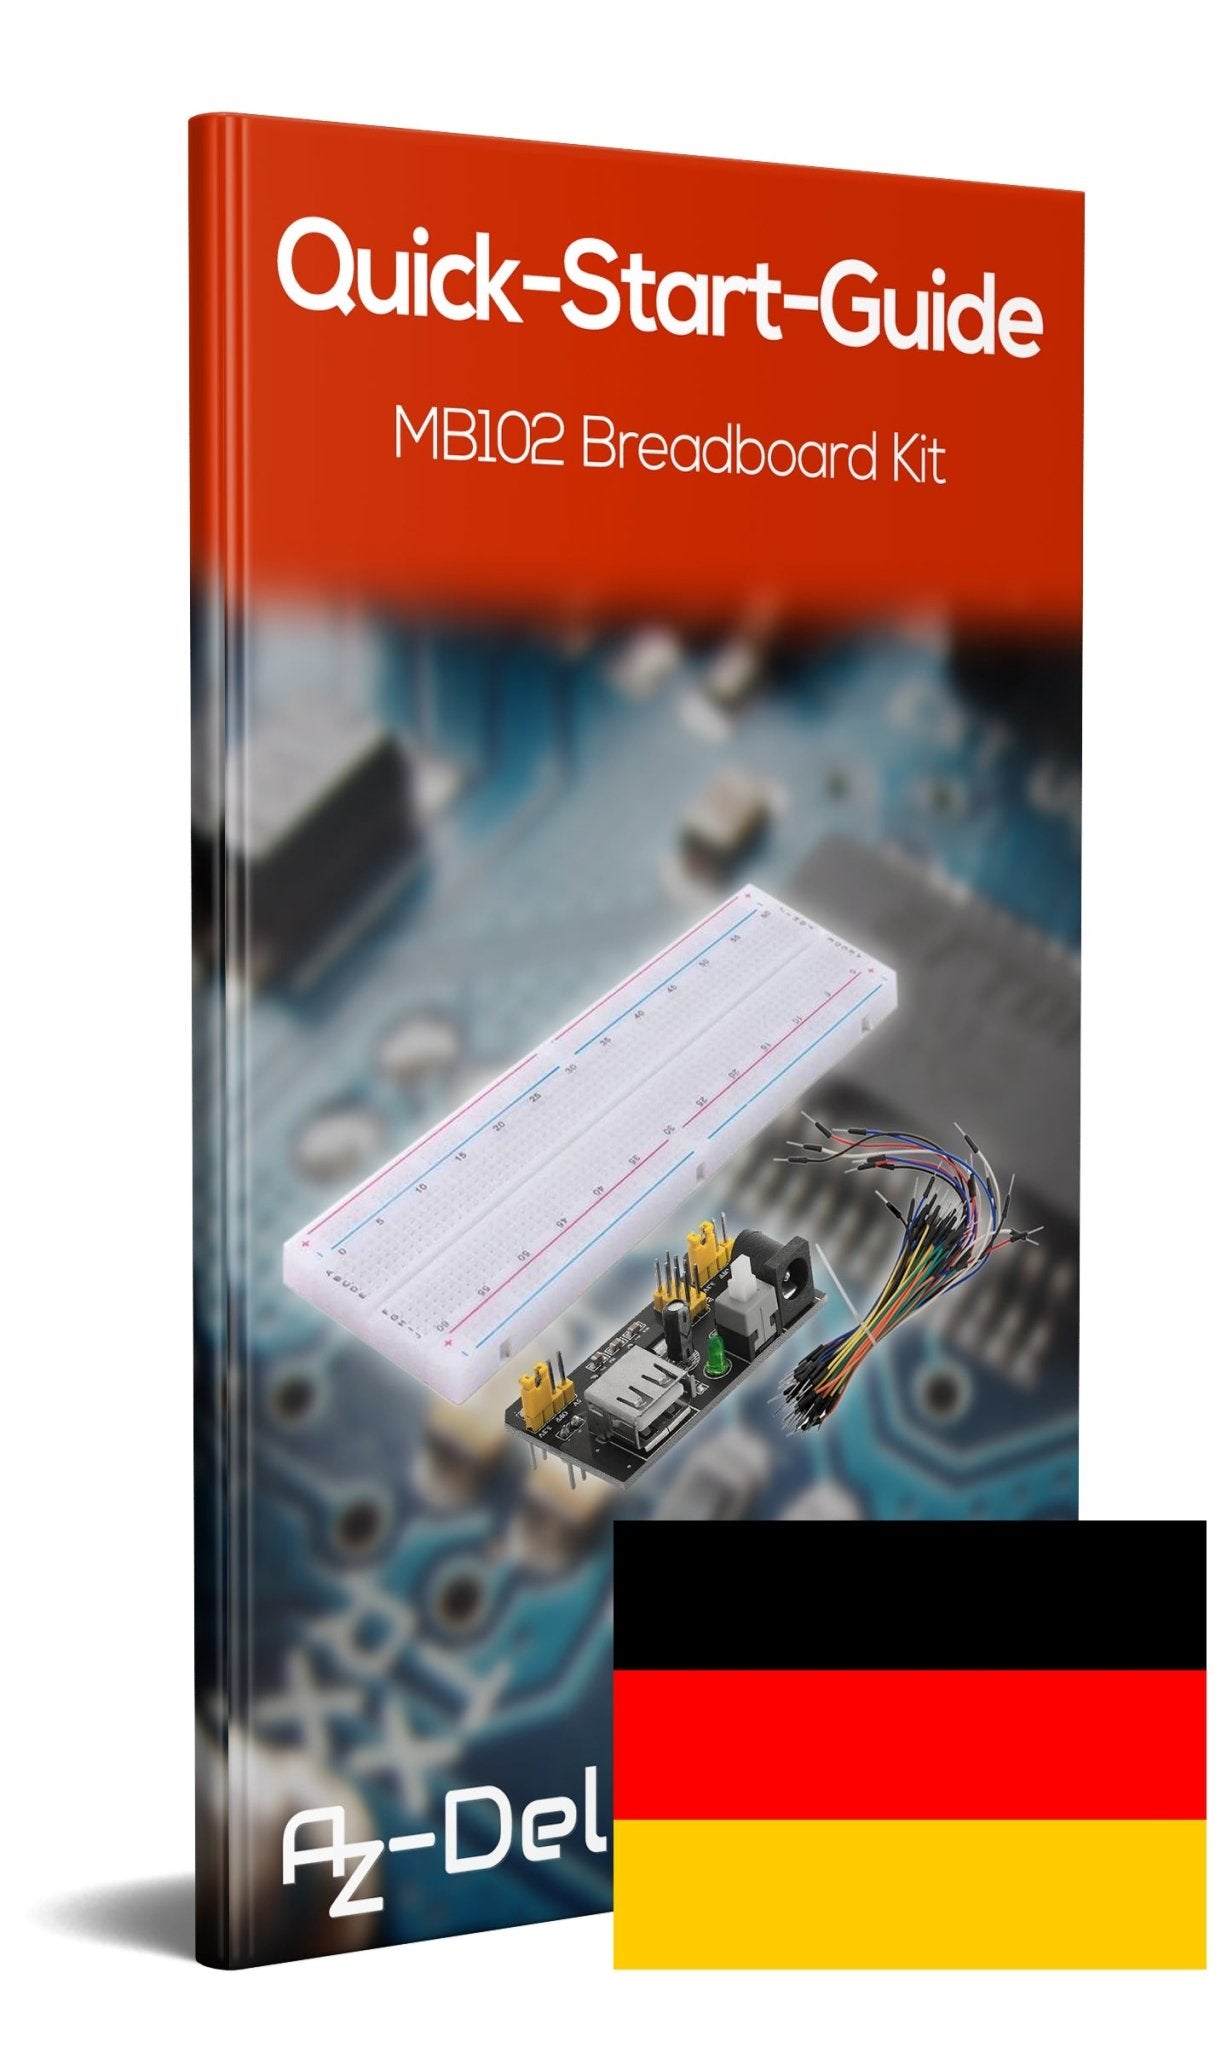 MB 102 Breadboard Kit - 830 Breadboard, Netzteil Adapter 3,3V 5V, 65Stk Steckbrücken - AZ-Delivery